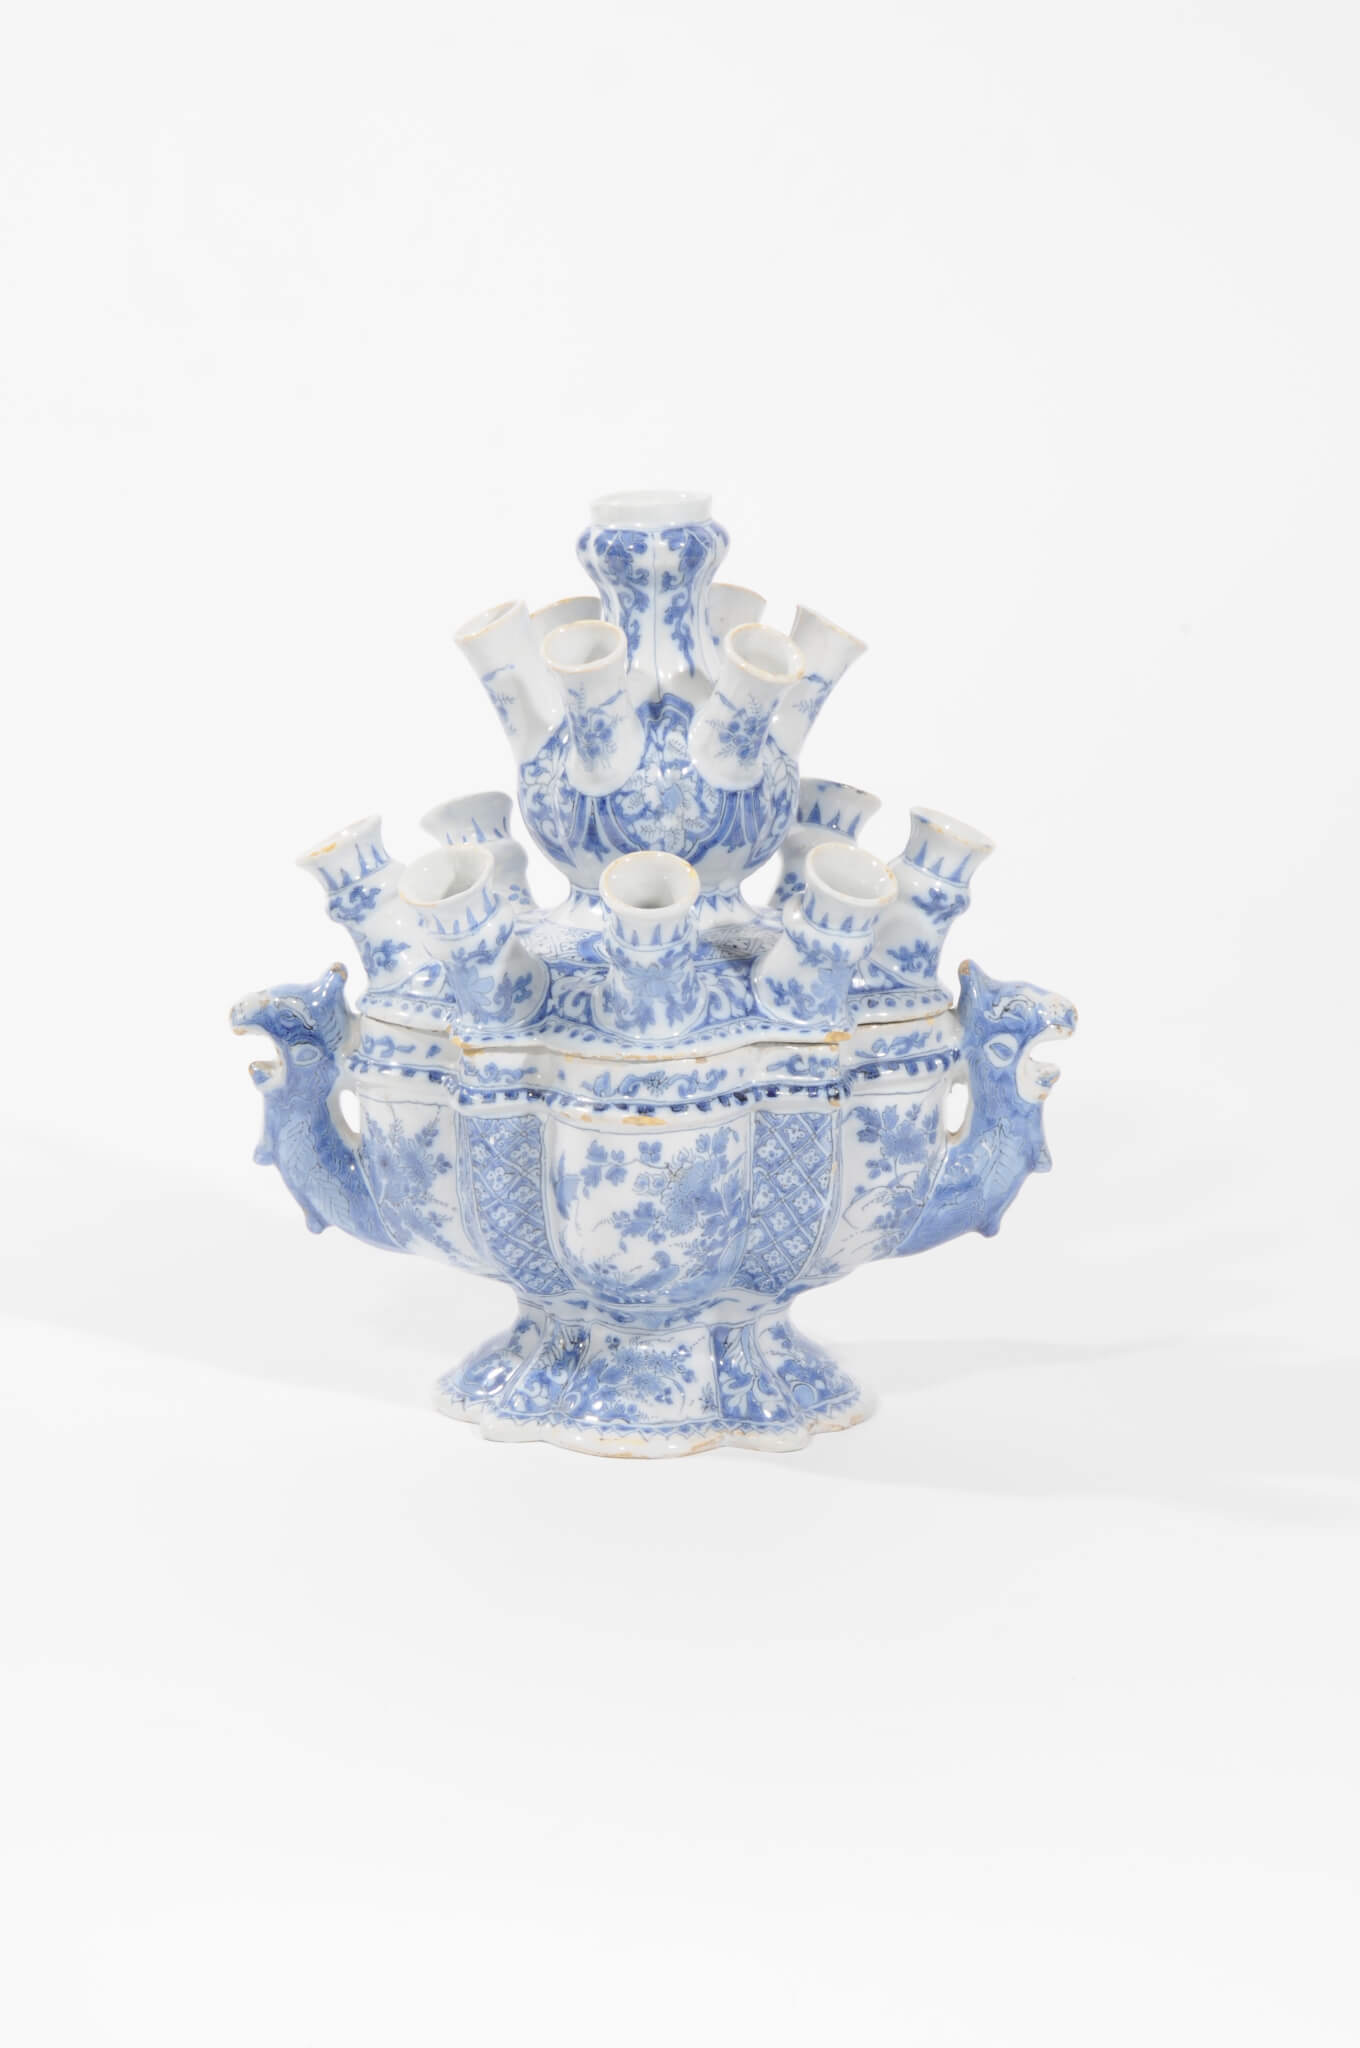 Antique Delftware flower bowl